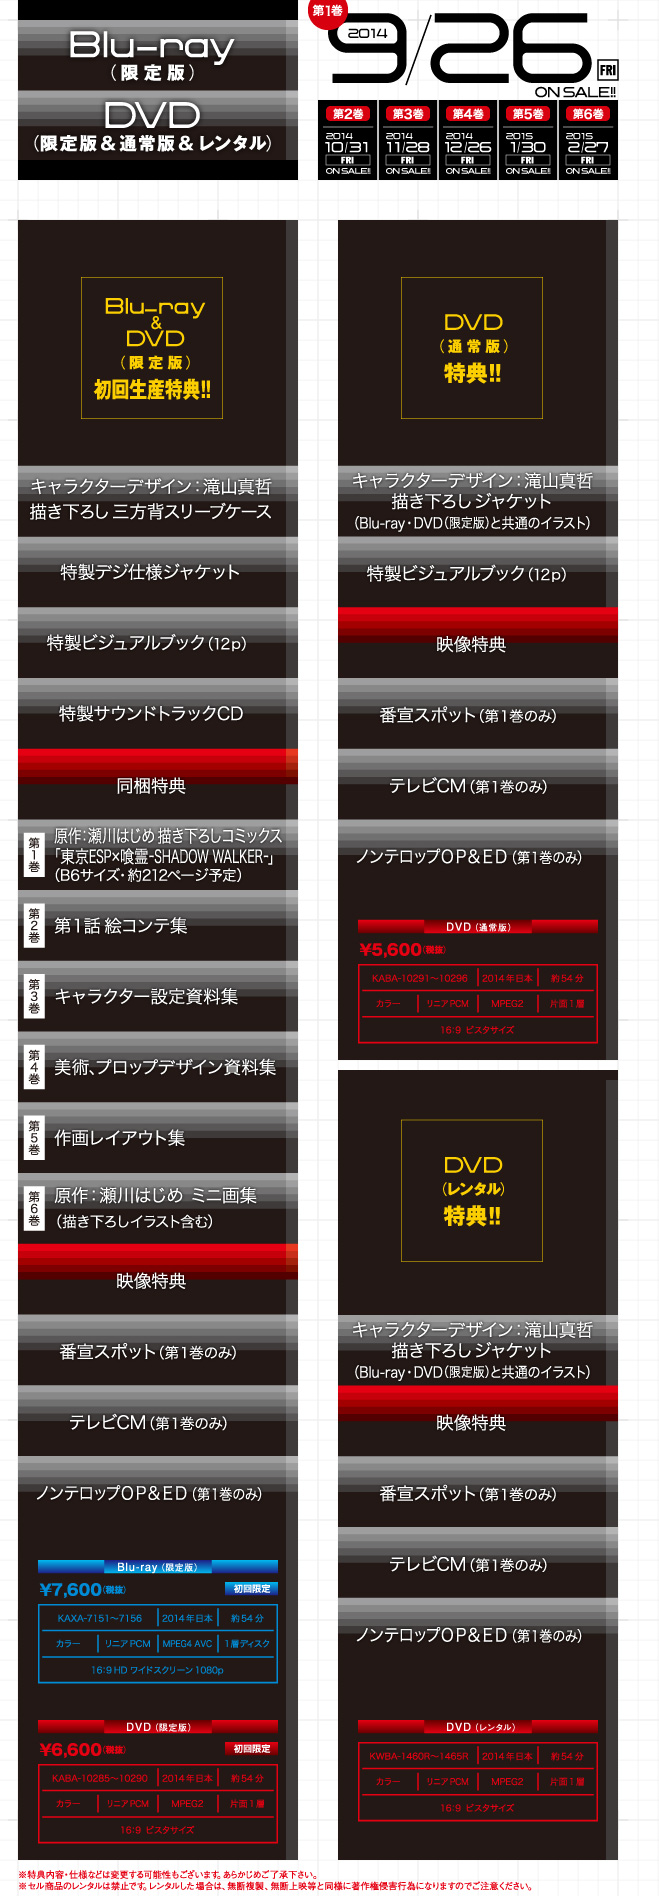 
Blu-ray&DVD　2014年9月26日（金）より発売決定！！
「東京ESP」Blu-ray&DVD第1巻　は2014年9月26日（金）発売！！

■Blu-ray限定版　価格：7,600円（税抜）
第1巻　品番：KAXA-7151　2014年9月26日（金）発売
第2巻　品番：KAXA-7152　2014年10月31日（金）発売
第3巻　品番：KAXA-7153　2014年11月28日（金）発売
第4巻　品番：KAXA-7154　2014年12月26日（金）発売
第5巻　品番：KAXA-7155　2015年1月30日（金）発売
第6巻　品番：KAXA-7156　2015年2月27日（金）発売

■ＤＶＤ限定版　価格：6,600円（税抜）
第1巻　品番：KABA-10285　2014年9月26日（金）発売
第2巻　品番：KABA-10286　2014年10月31日（金）発売
第3巻　品番：KABA-10287　2014年11月28日（金）発売
第4巻　品番：KABA-10288　2014年12月26日（金）発売
第5巻　品番：KABA-10289　2015年1月30日（金）発売
第6巻　品番：KABA-10290　2015年2月27日（金）発売

・収録内容：各２話収録・全6巻

【Blu-ray限定版 &DVD限定版 特典】
・キャラクターデザイン・滝山真哲描き下ろし三方背スリーブケース
・本編DISC+特製CD（サウンドトラック）
・特製デジ仕様ジャケット
・封入特典その１：特製ビジュアルブック（12ｐ）
・封入特典その２：
第１巻＝原作・瀬川はじめ描き下ろしコミックス「東京ESP×喰霊－SHADOW WALKER－」（約212ページ予定）
第２巻＝第１話絵コンテ集
第３巻＝キャラクター設定資料集
第４巻＝美術、プロップデザイン資料集
第５巻＝作画レイアウト集
第６巻＝原作・瀬川はじめミニ画集（描き下ろしイラスト含む）
・映像特典：番宣スポット（第１巻のみ）、テレビCM（第１巻のみ）、ノンテロップＯＰ＆ＥＤ（第１巻のみ）

■ＤＶＤ通常版　価格：5,600円（税抜）

第1巻　品番：KABA-10291　2014年9月26日（金）発売
第2巻　品番：KABA-10292　2014年10月31日（金）発売
第3巻　品番：KABA-10293　2014年11月28日（金）発売
第4巻　品番：KABA-10294　2014年12月26日（金）発売
第5巻　品番：KABA-10295　2015年1月30日（金）発売
第6巻　品番：KABA-10296　2015年2月27日（金）発売

【ＤＶＤ通常版版 特典】
・キャラクターデザイン・滝山真哲描き下ろしジャケット
（Blu-ray限定版・DVD限定版と同じ絵柄になります）
・封入特典：特製ビジュアルブック（12ｐ）
・映像特典：番宣スポット（第１巻のみ）、テレビCM（第１巻のみ）、ノンテロップＯＰ＆ＥＤ（第１巻のみ）

後続巻も毎月発売予定！！

発売：株式会社KADOKAWA　角川書店　　販売：株式会社KADOKAWA　角川書店
(C)2014 瀬川はじめ／KADOKAWA角川書店刊／[東京ESP]製作委員会

※特典内容・仕様などは変更する可能性もございます。あらかじめご了承ください。
		